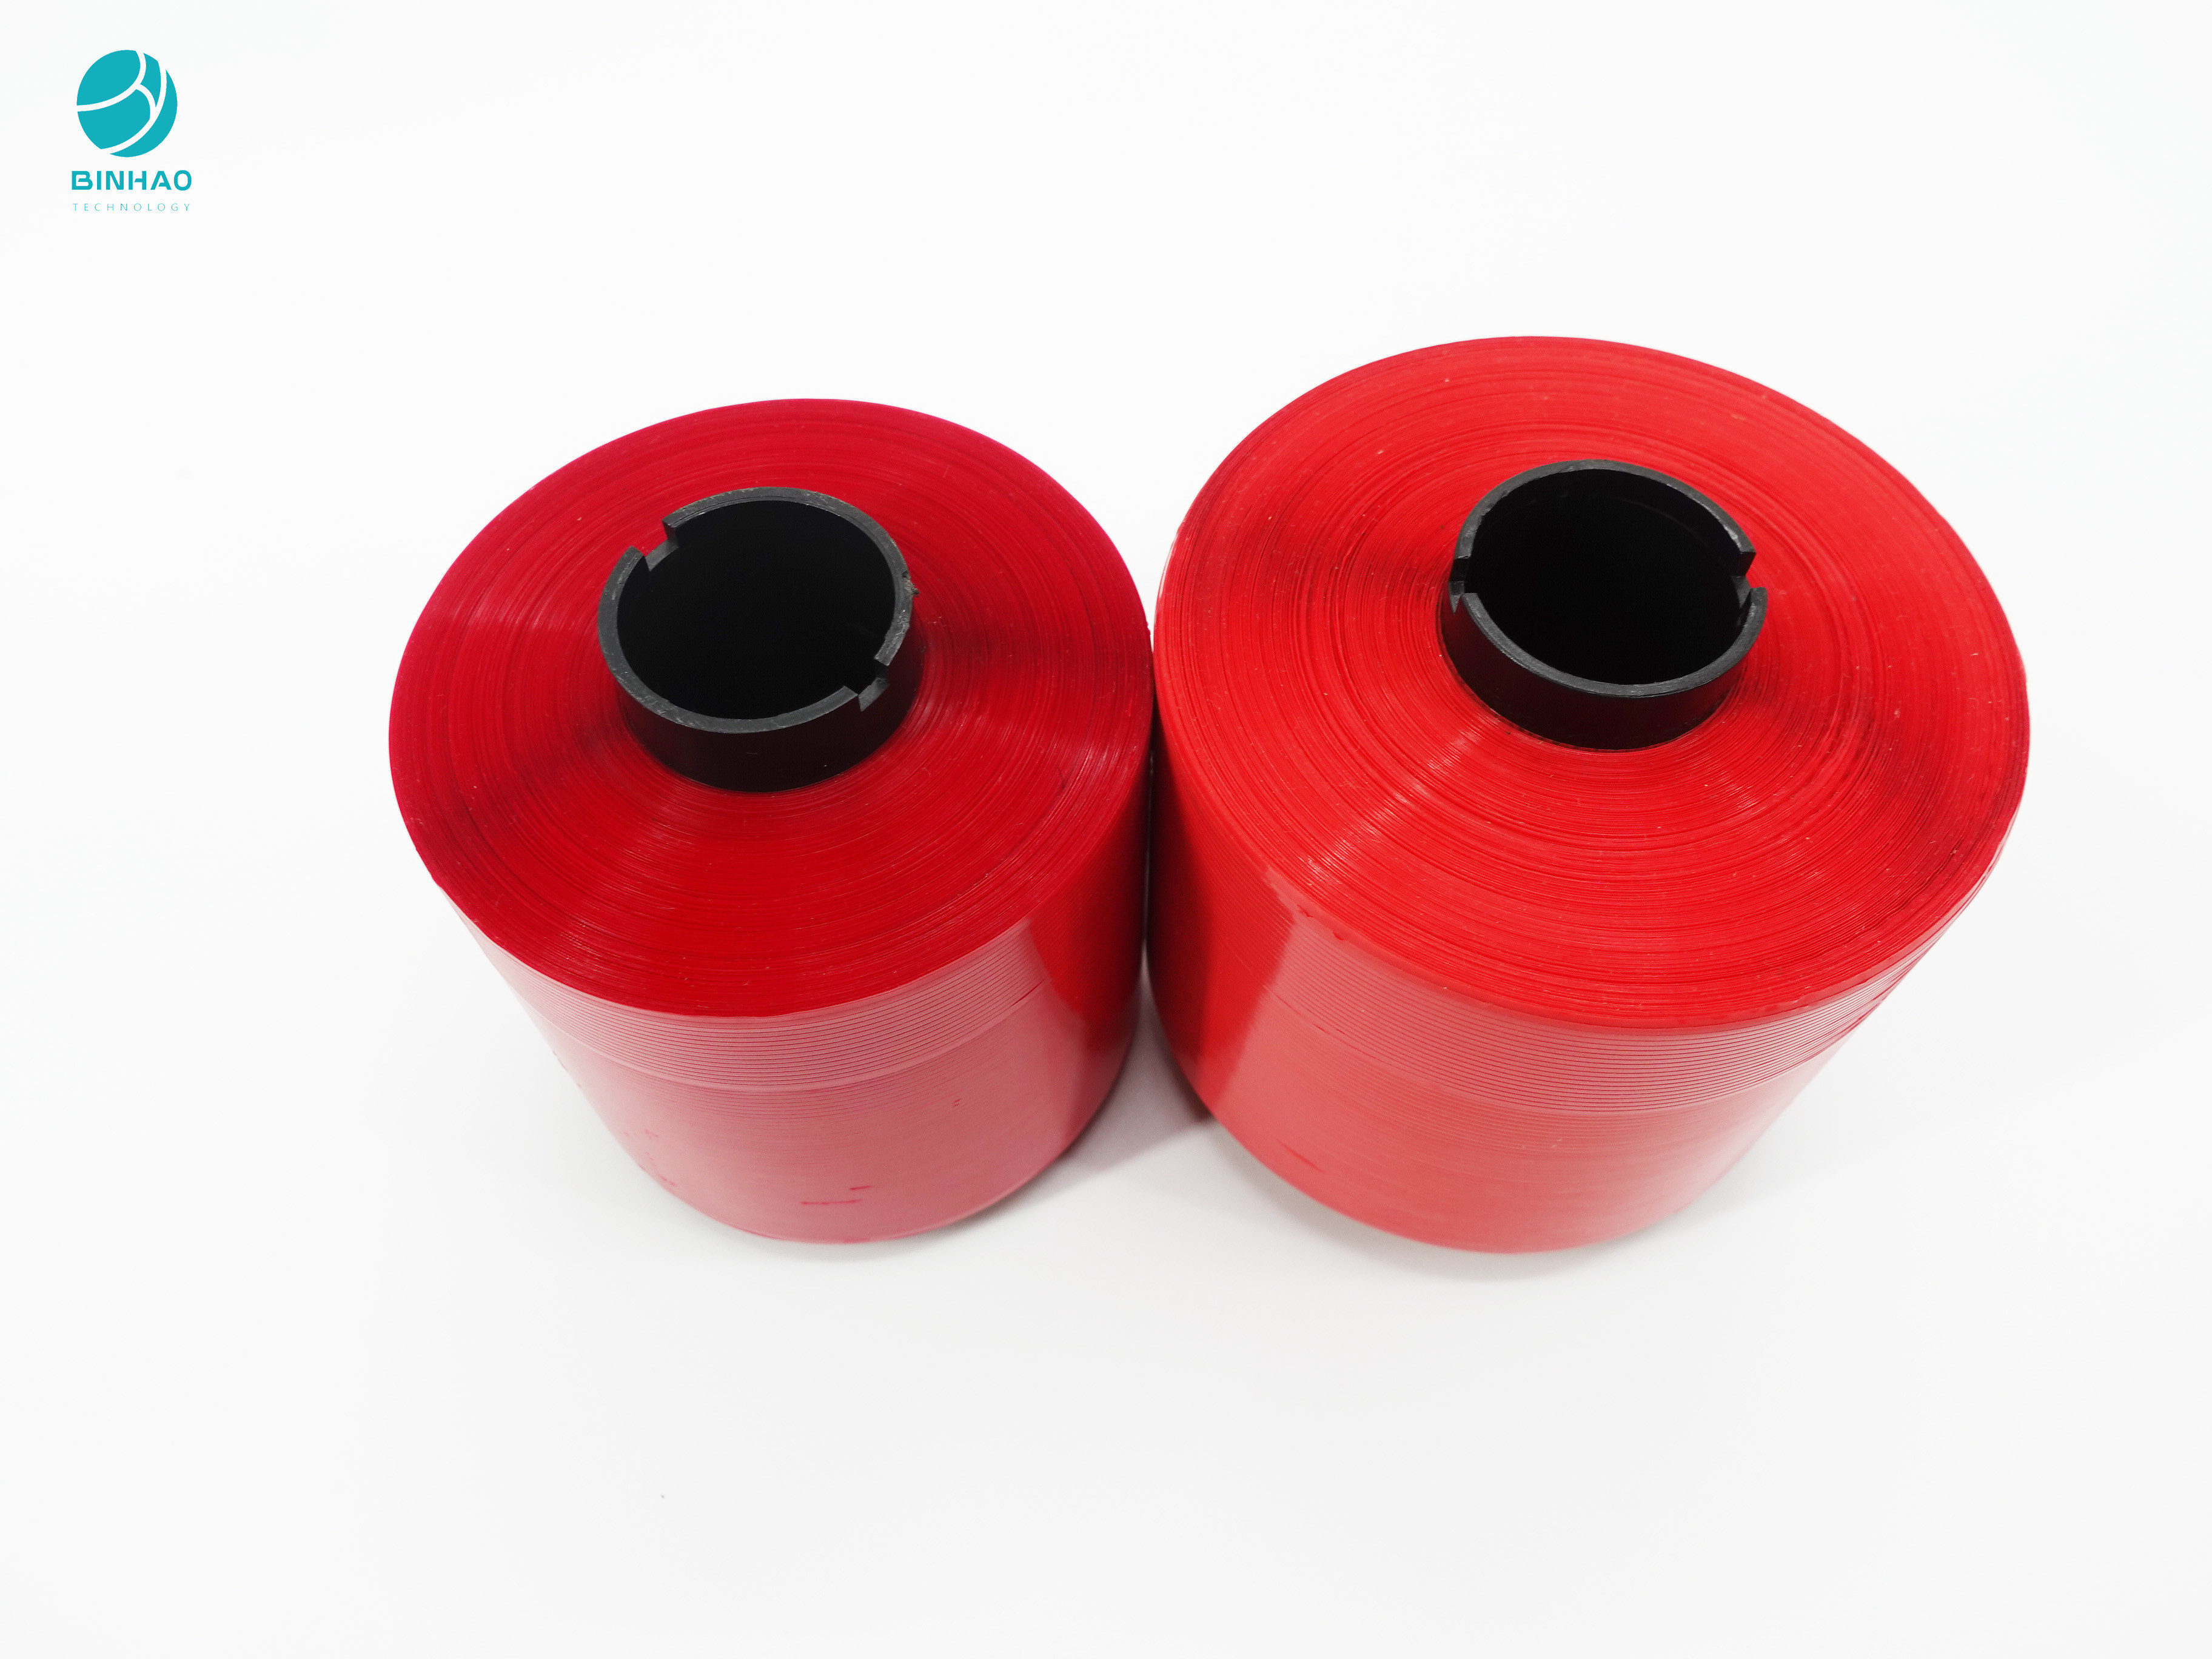 2mm Perekat Bopp Tahan Panas Beberapa Pita Strip Air Mata Merah Untuk Kemasan